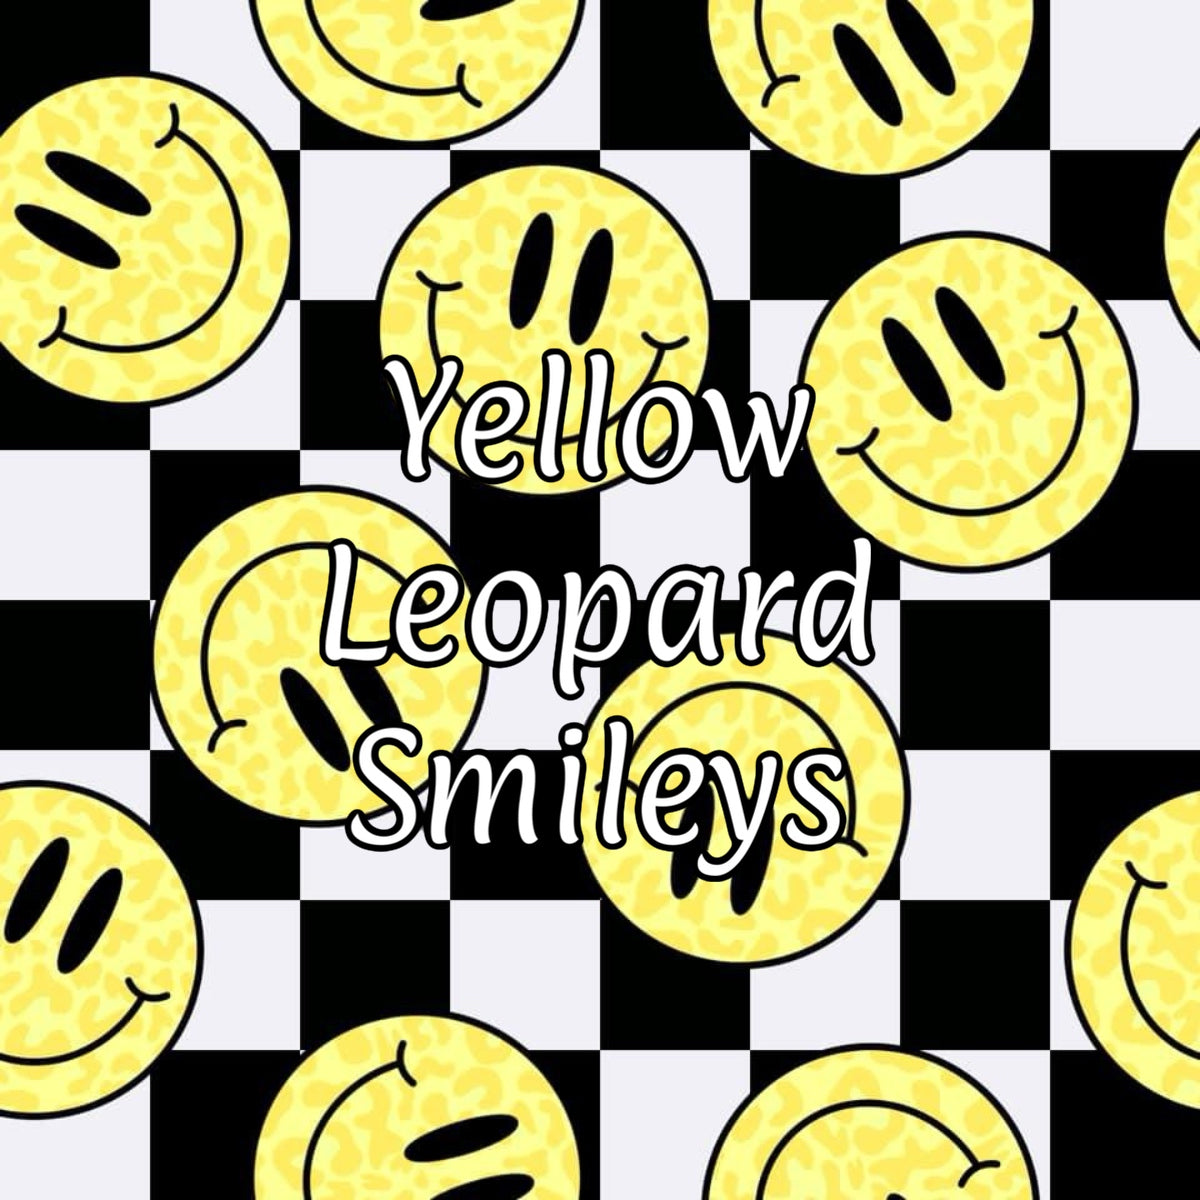 YELLOW LEOPARD SMILEYS